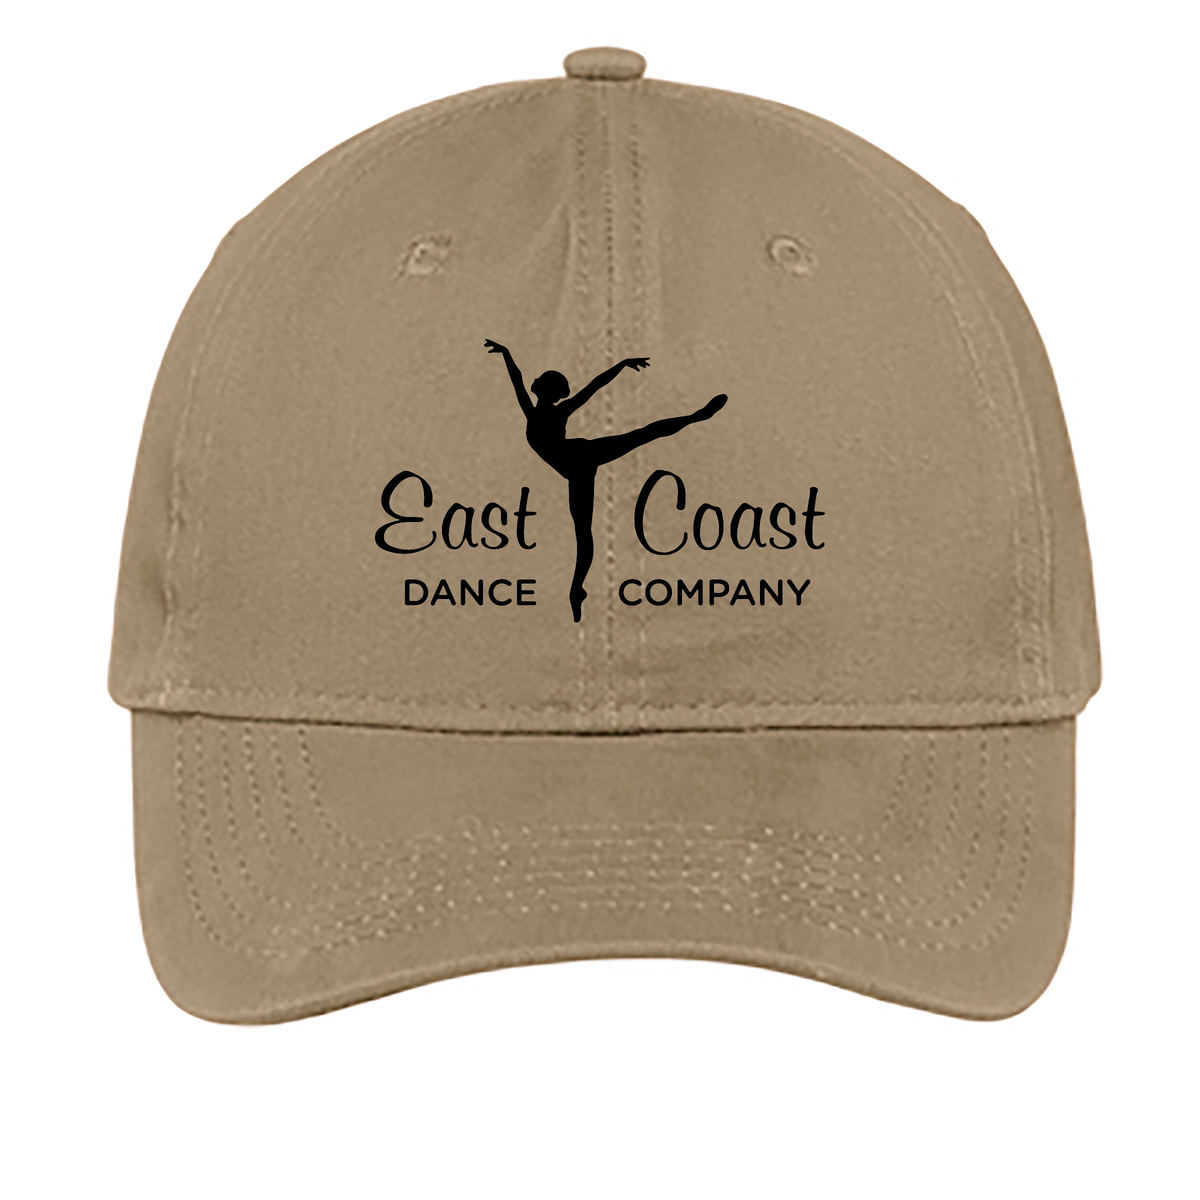 East Coast Dance Company Brushed Twill Low Profile Cap